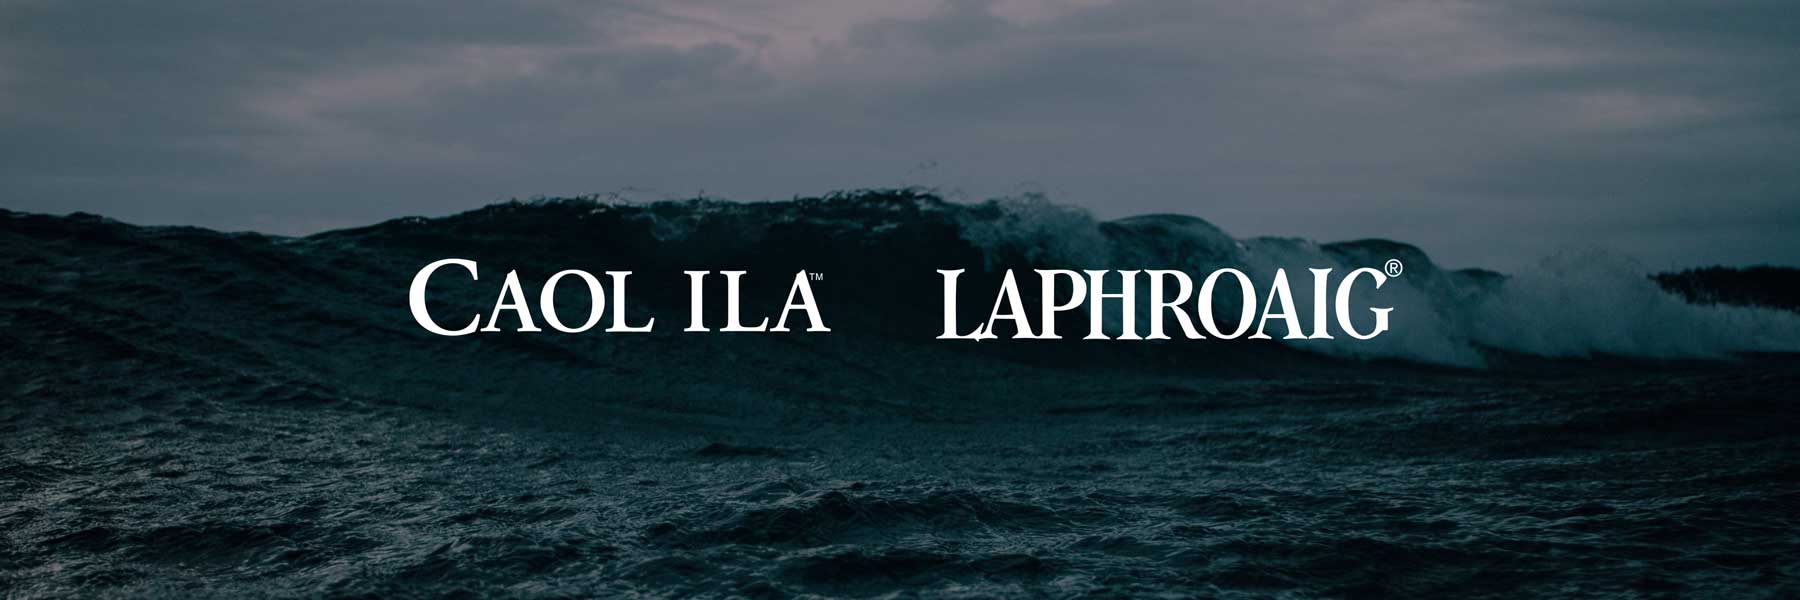 Caol Ila vs Laphroaig whisky review